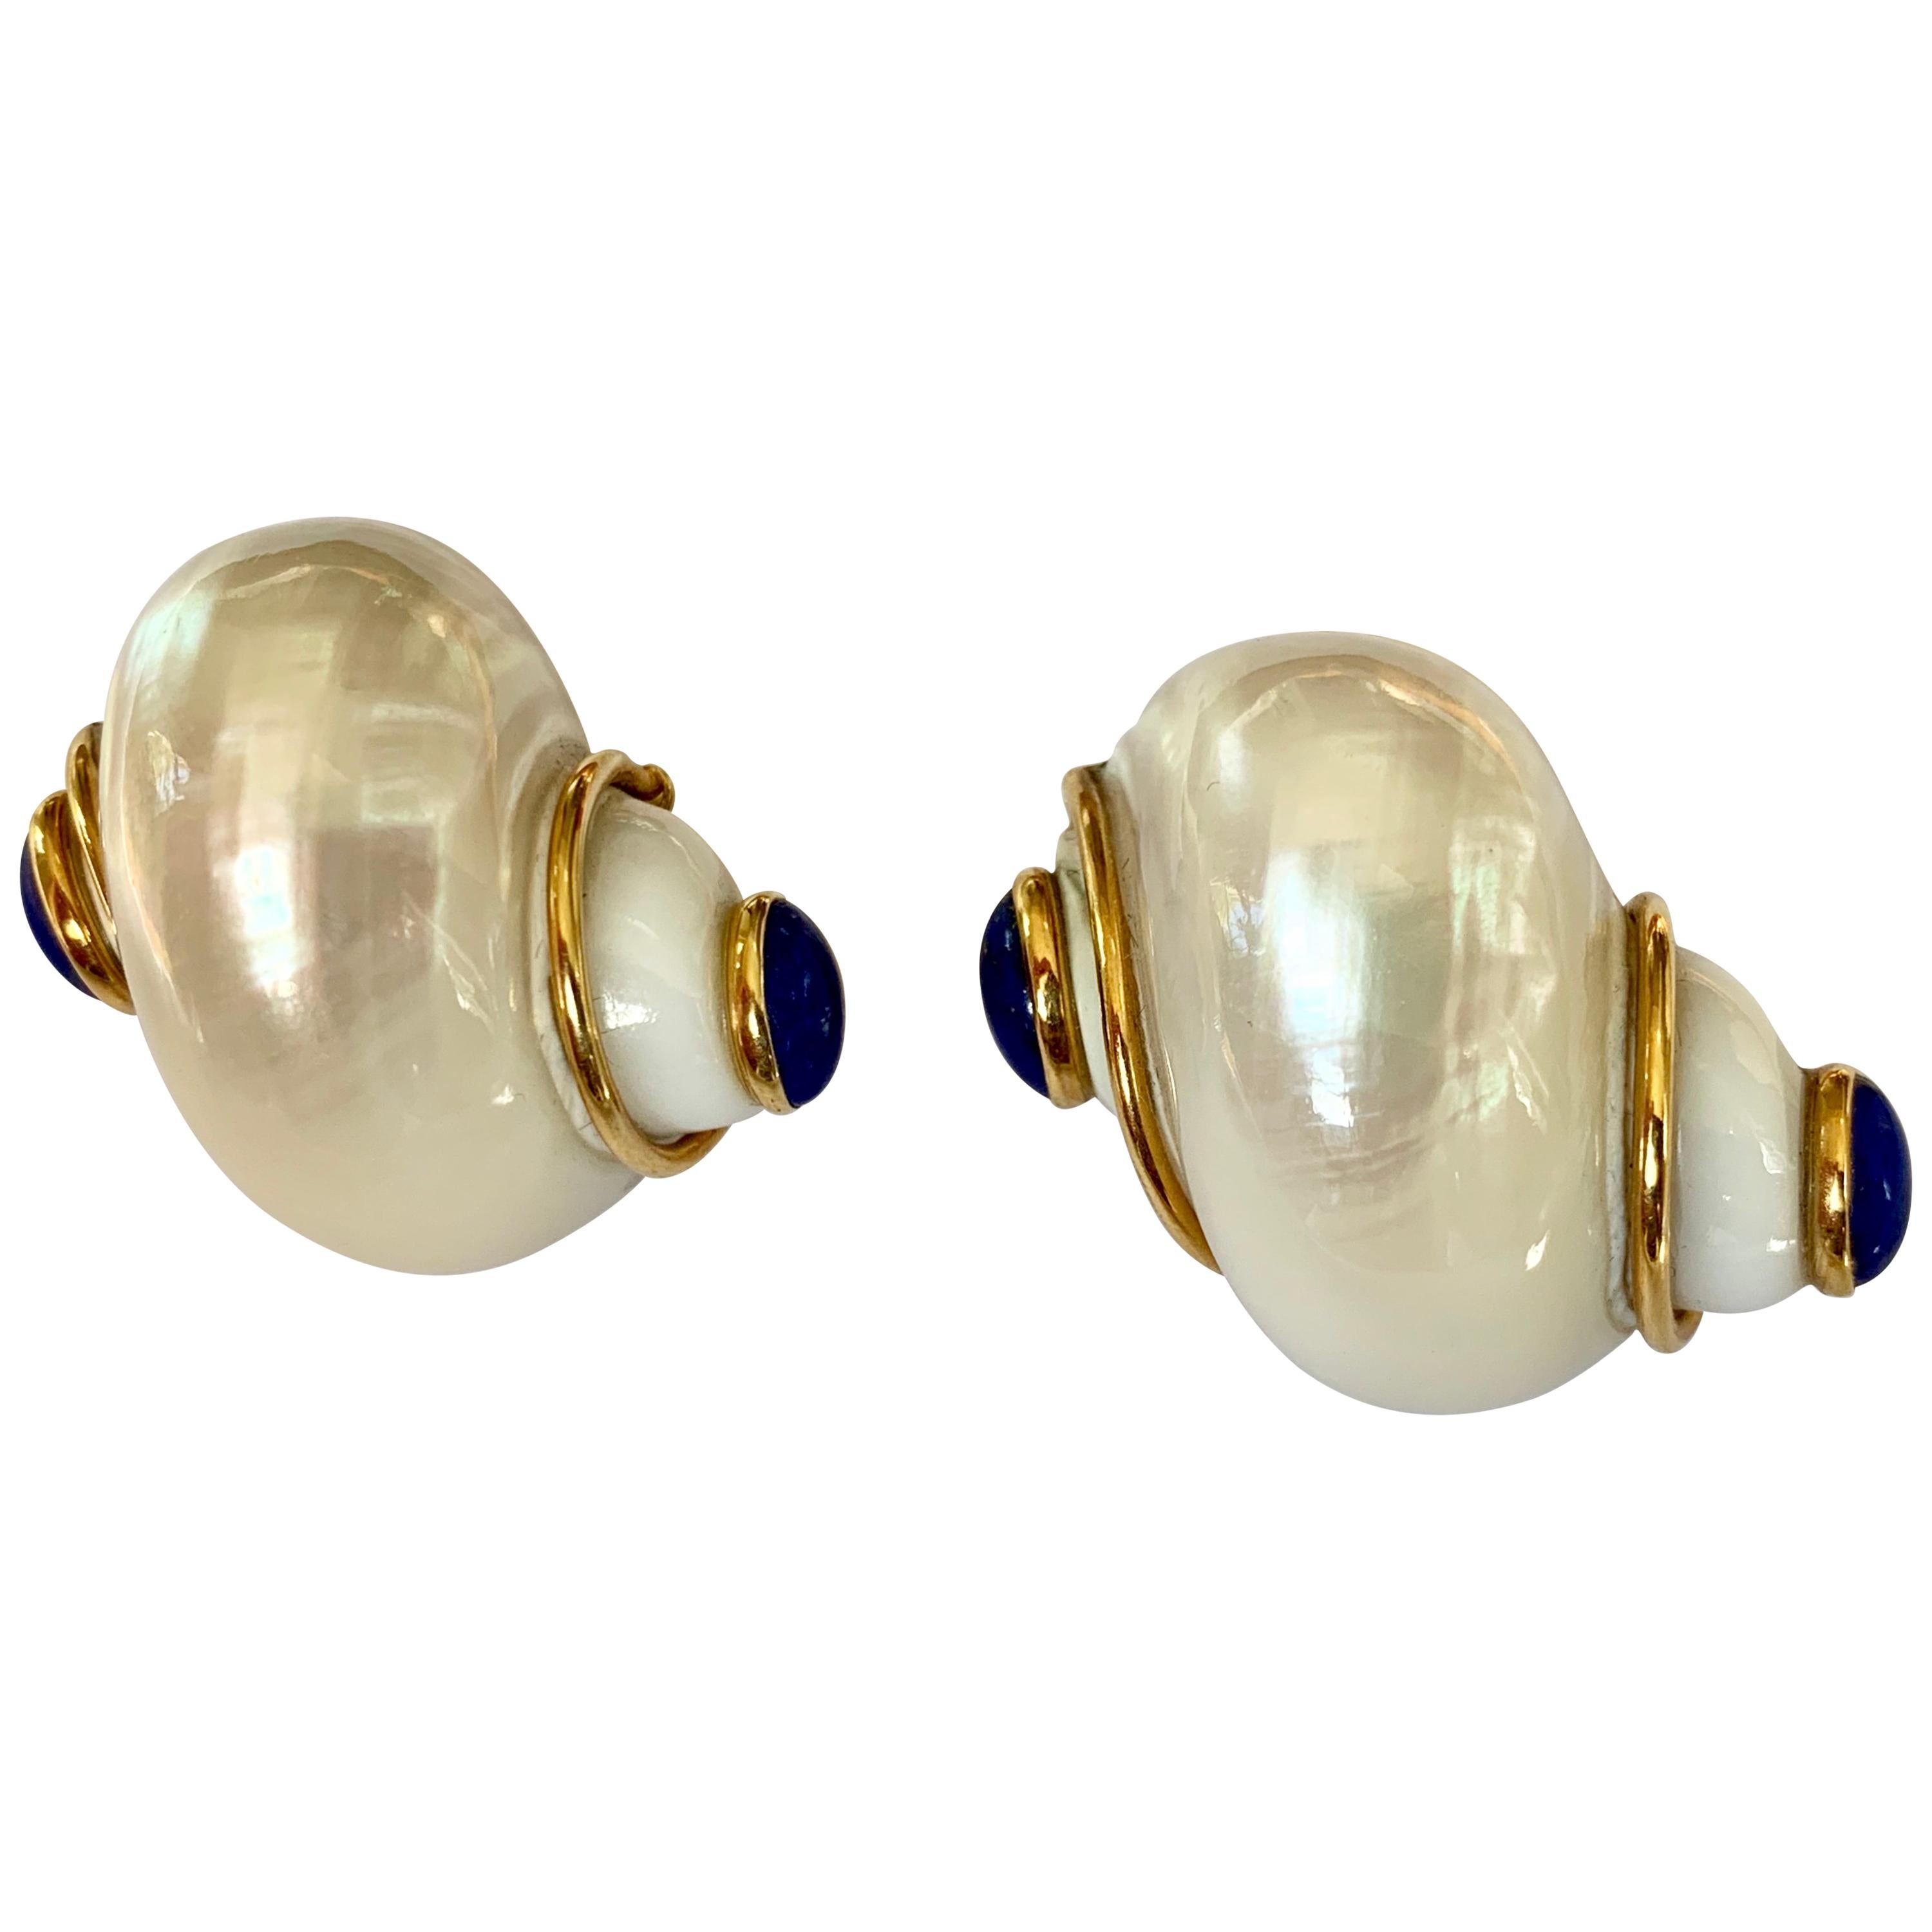 Seaman Schepps Turbo Shell and Lapis Lazuli Gold Earrings